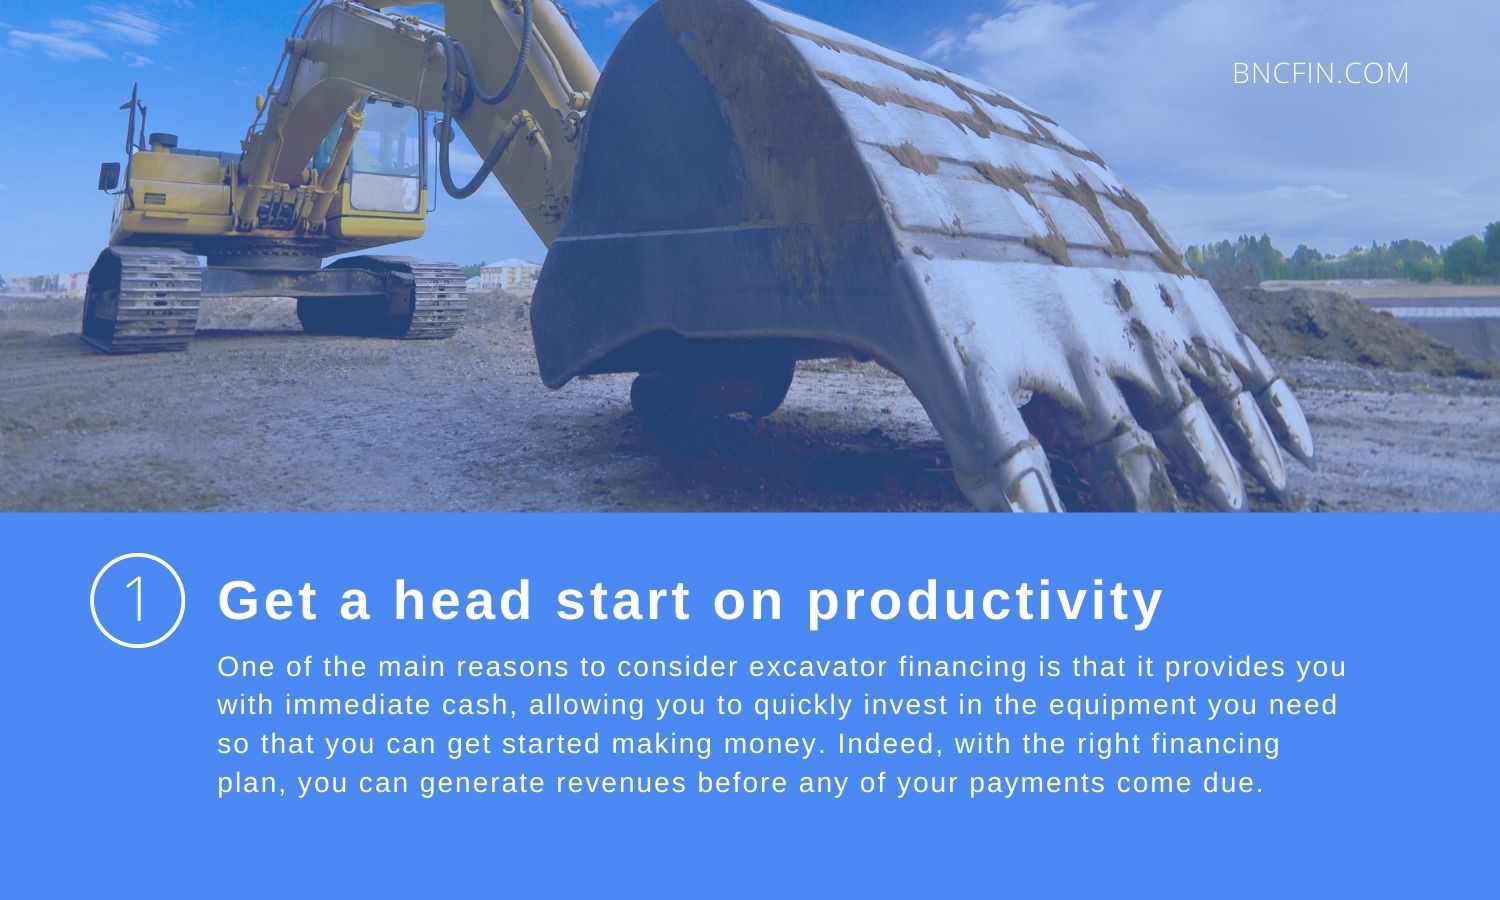 Get a head start on productivity.